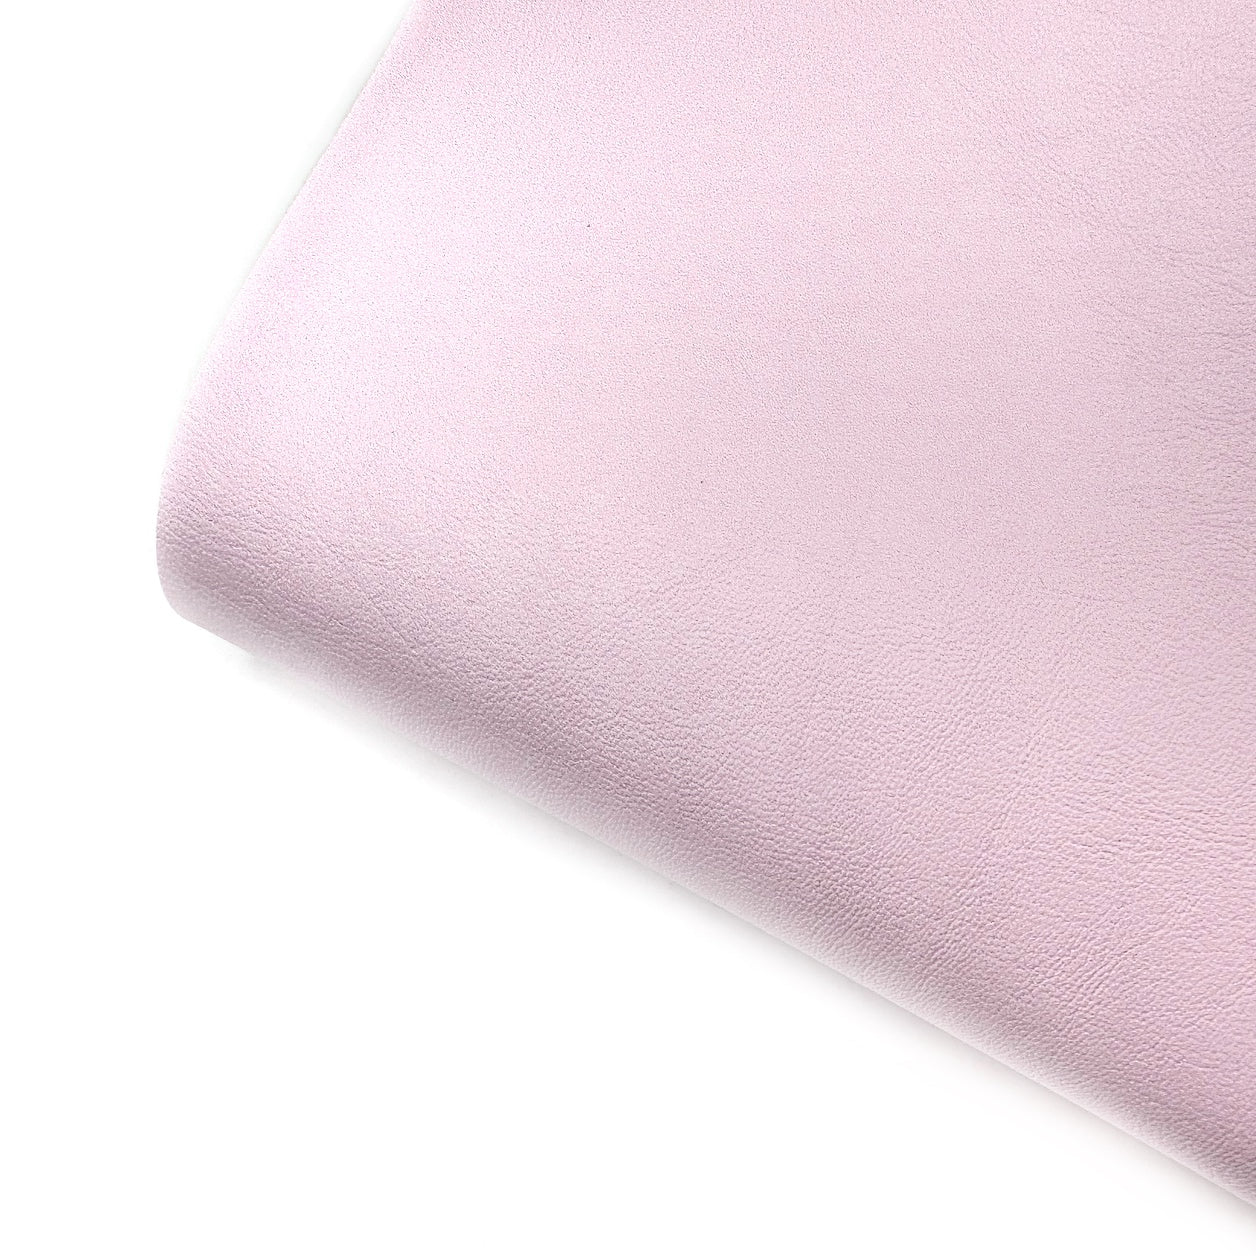 Blushing Bride Core Colour Premium Faux Leather Fabric Sheets